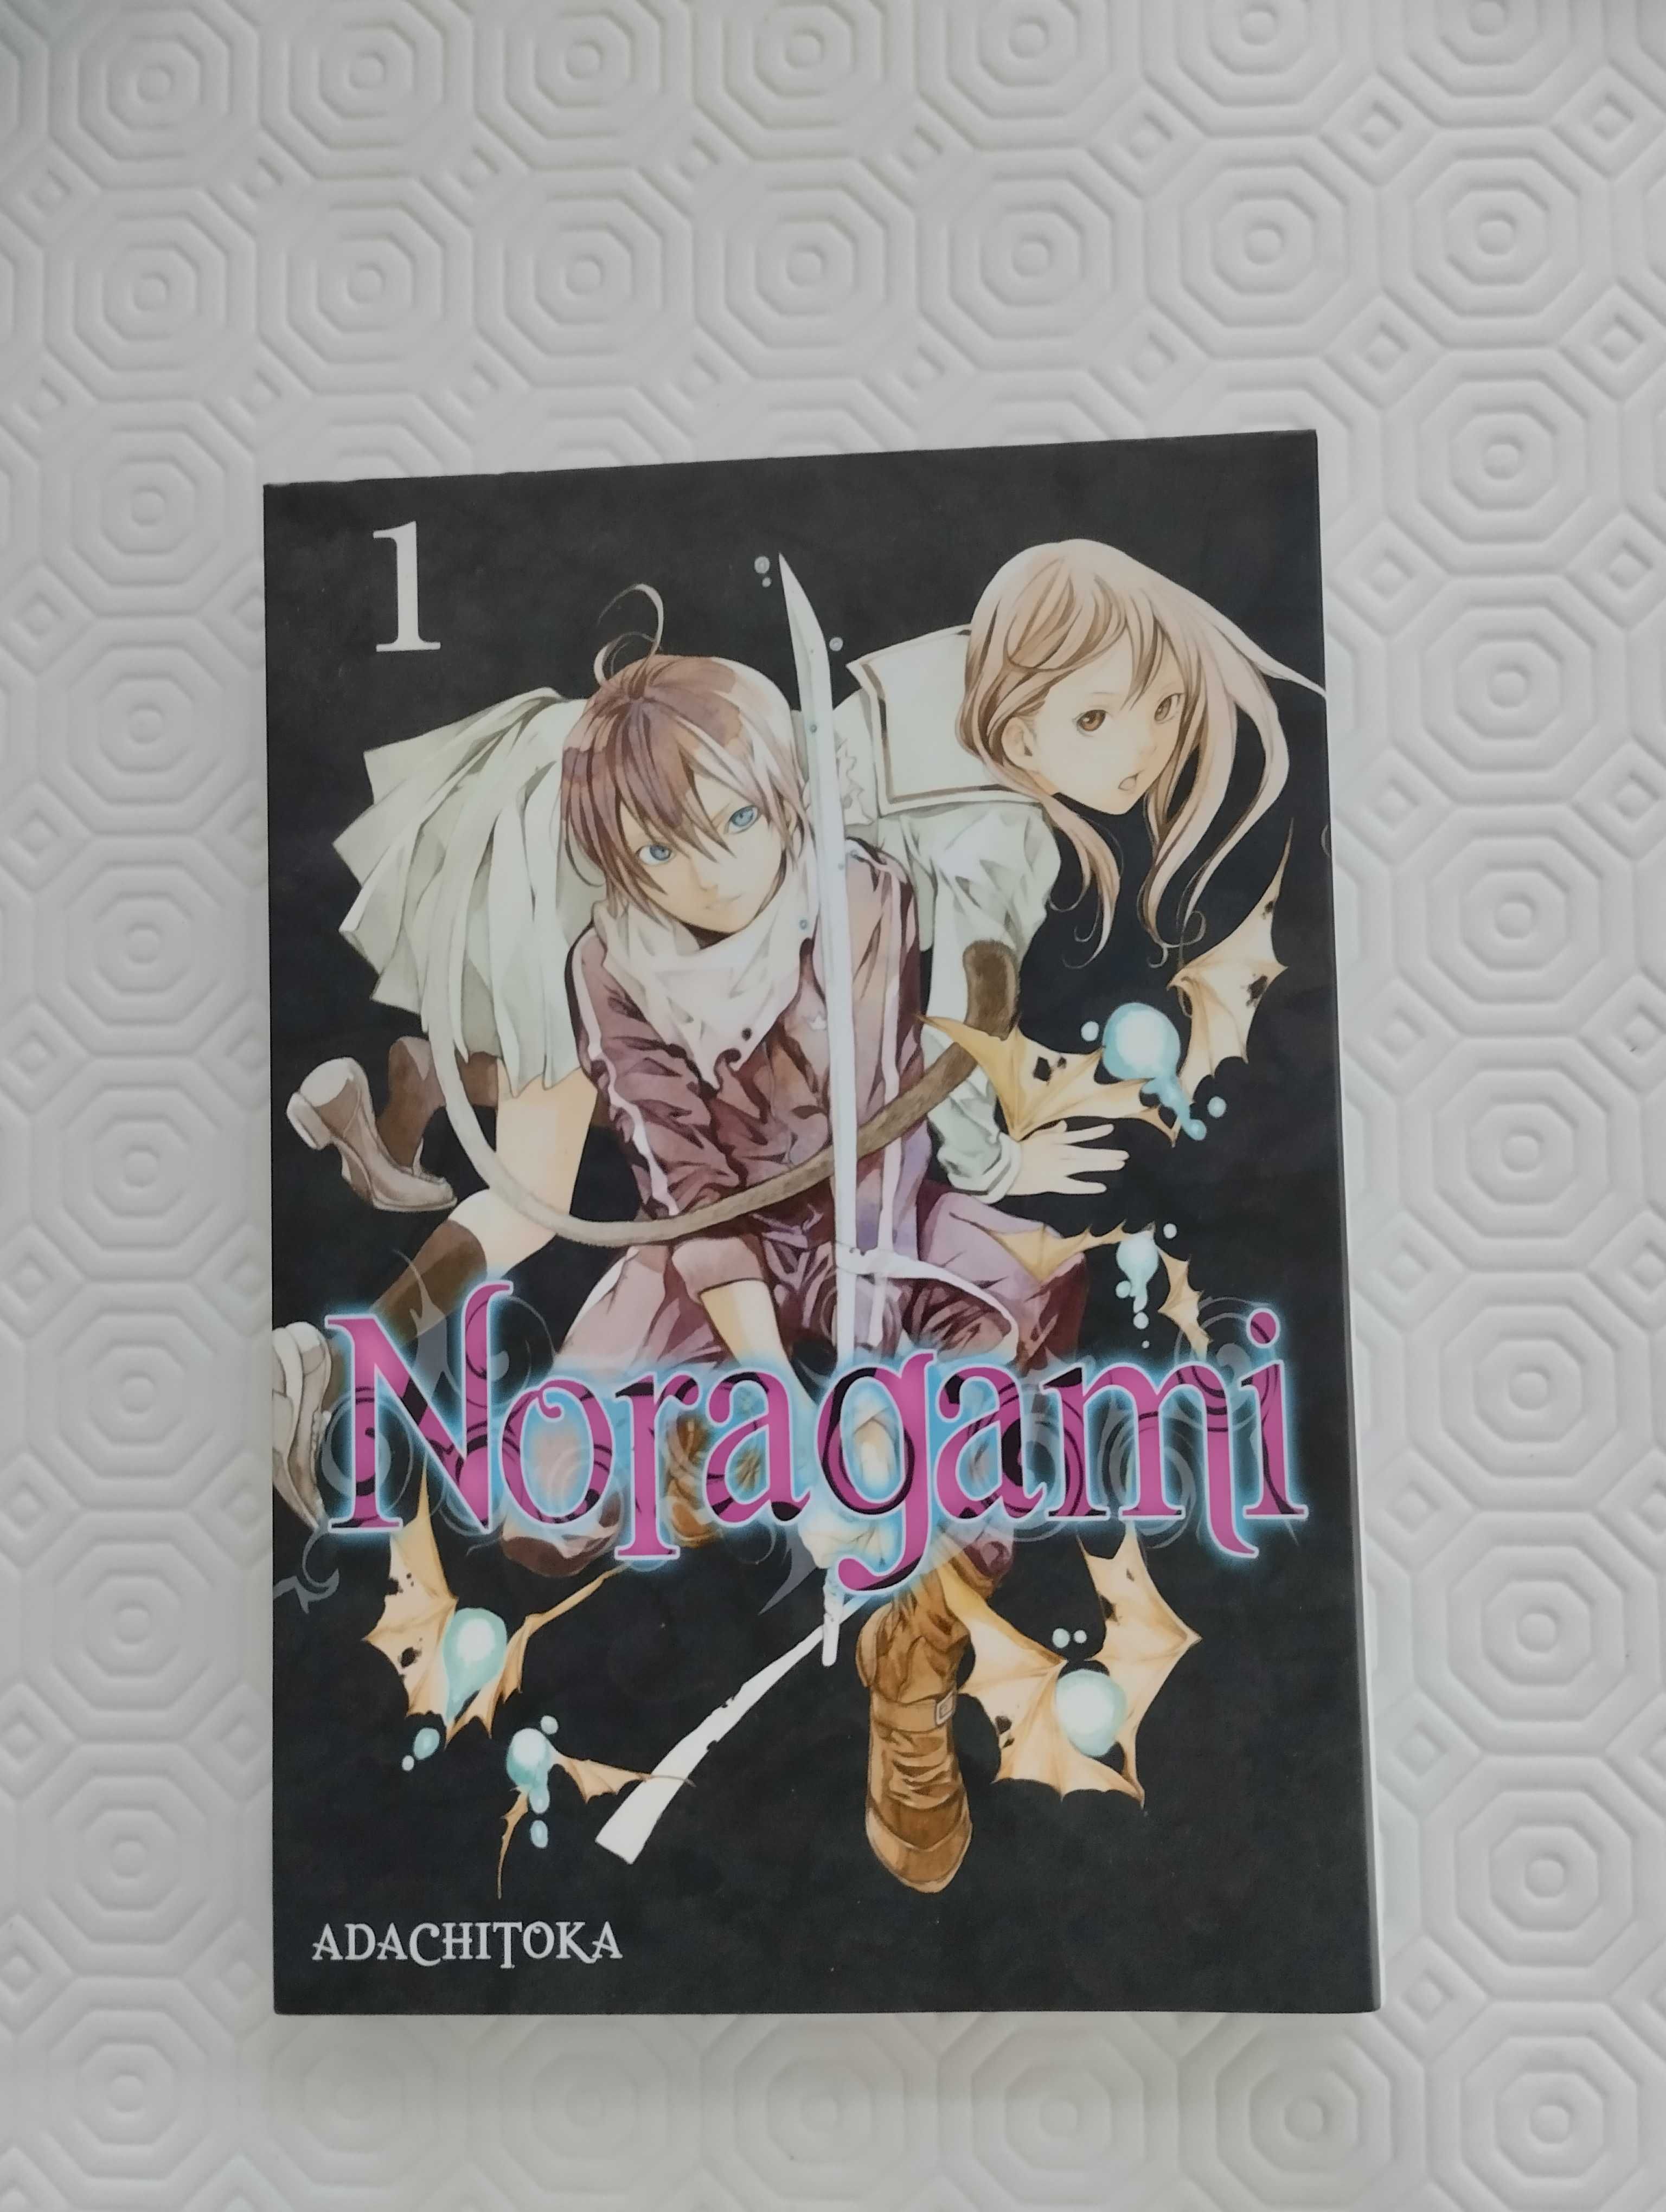 Manga: "Noragami" 1